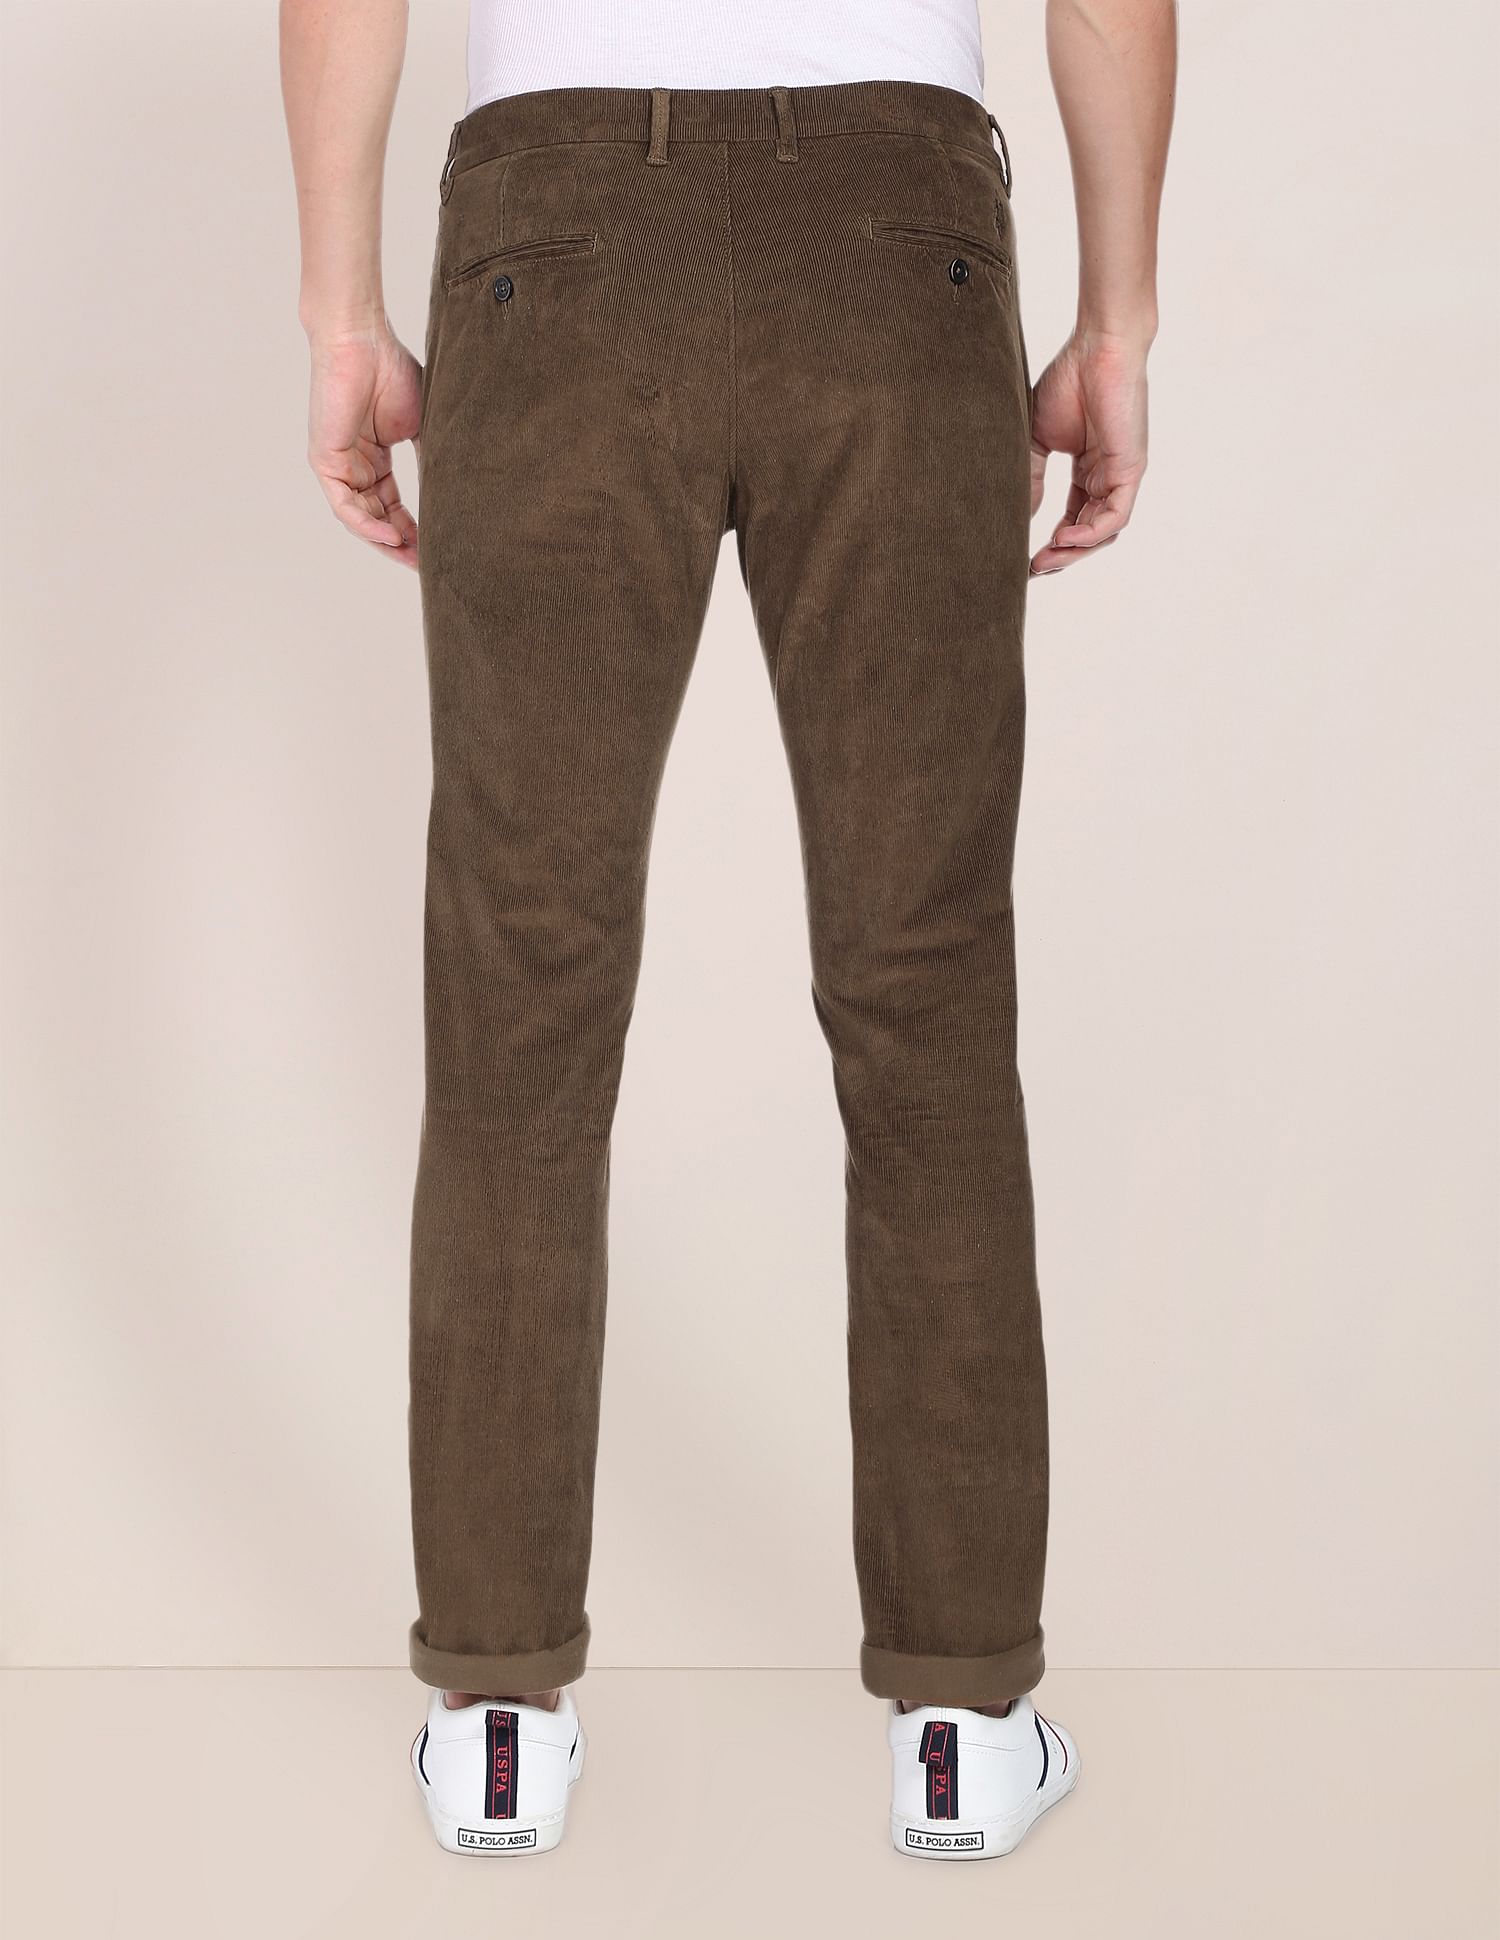 U.S. Polo Assn. Men's Plaid Woven Lounge Pants, Sizes S-XL, Mens Pajamas -  Walmart.com